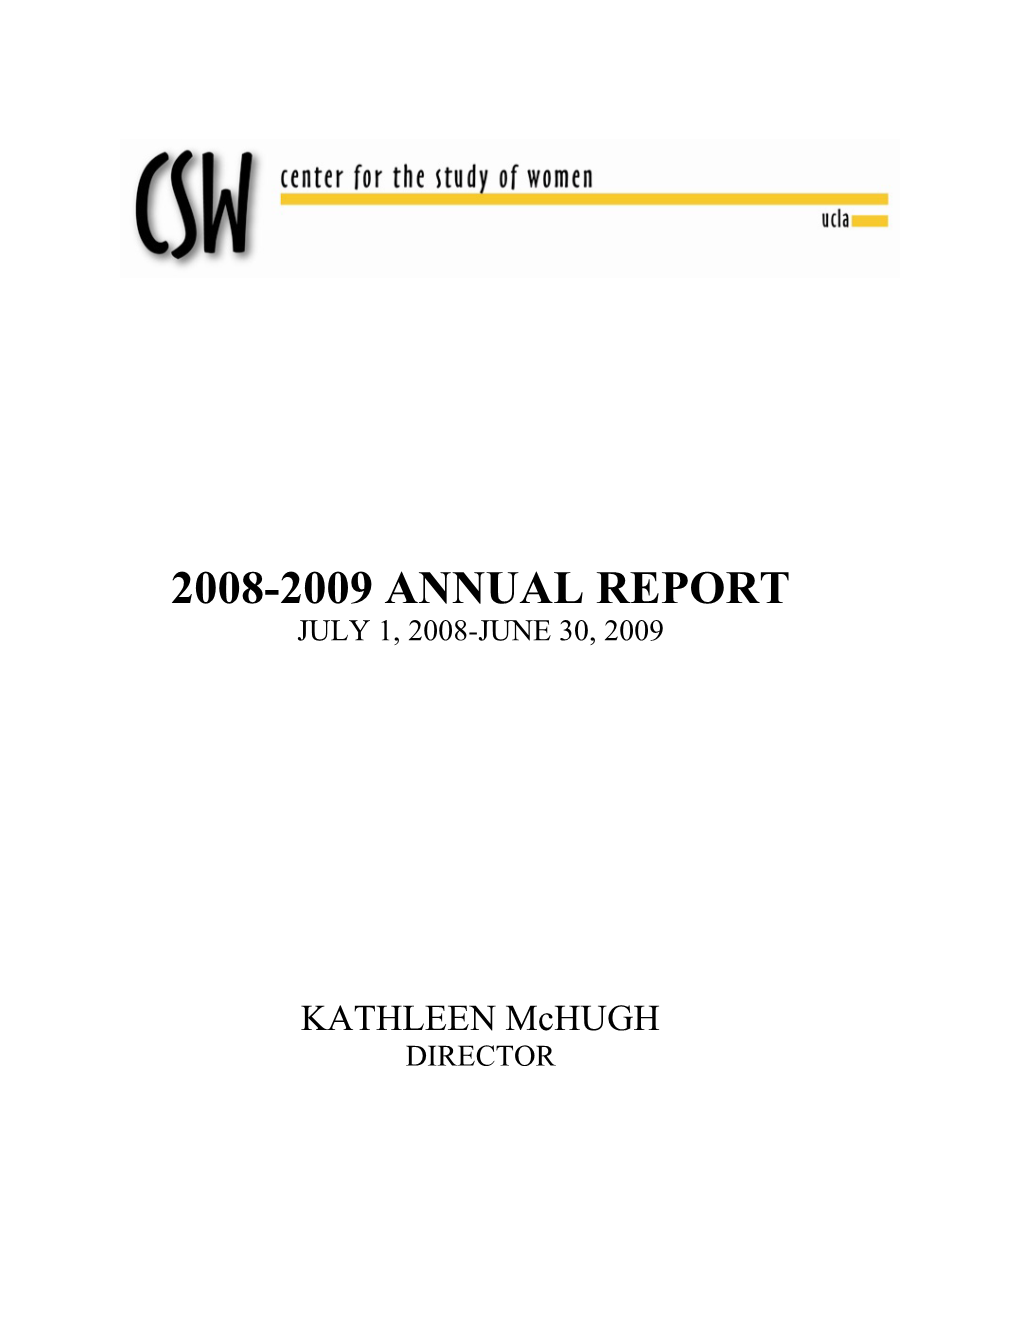 2008-2009 Annual Report July 1, 2008-June 30, 2009